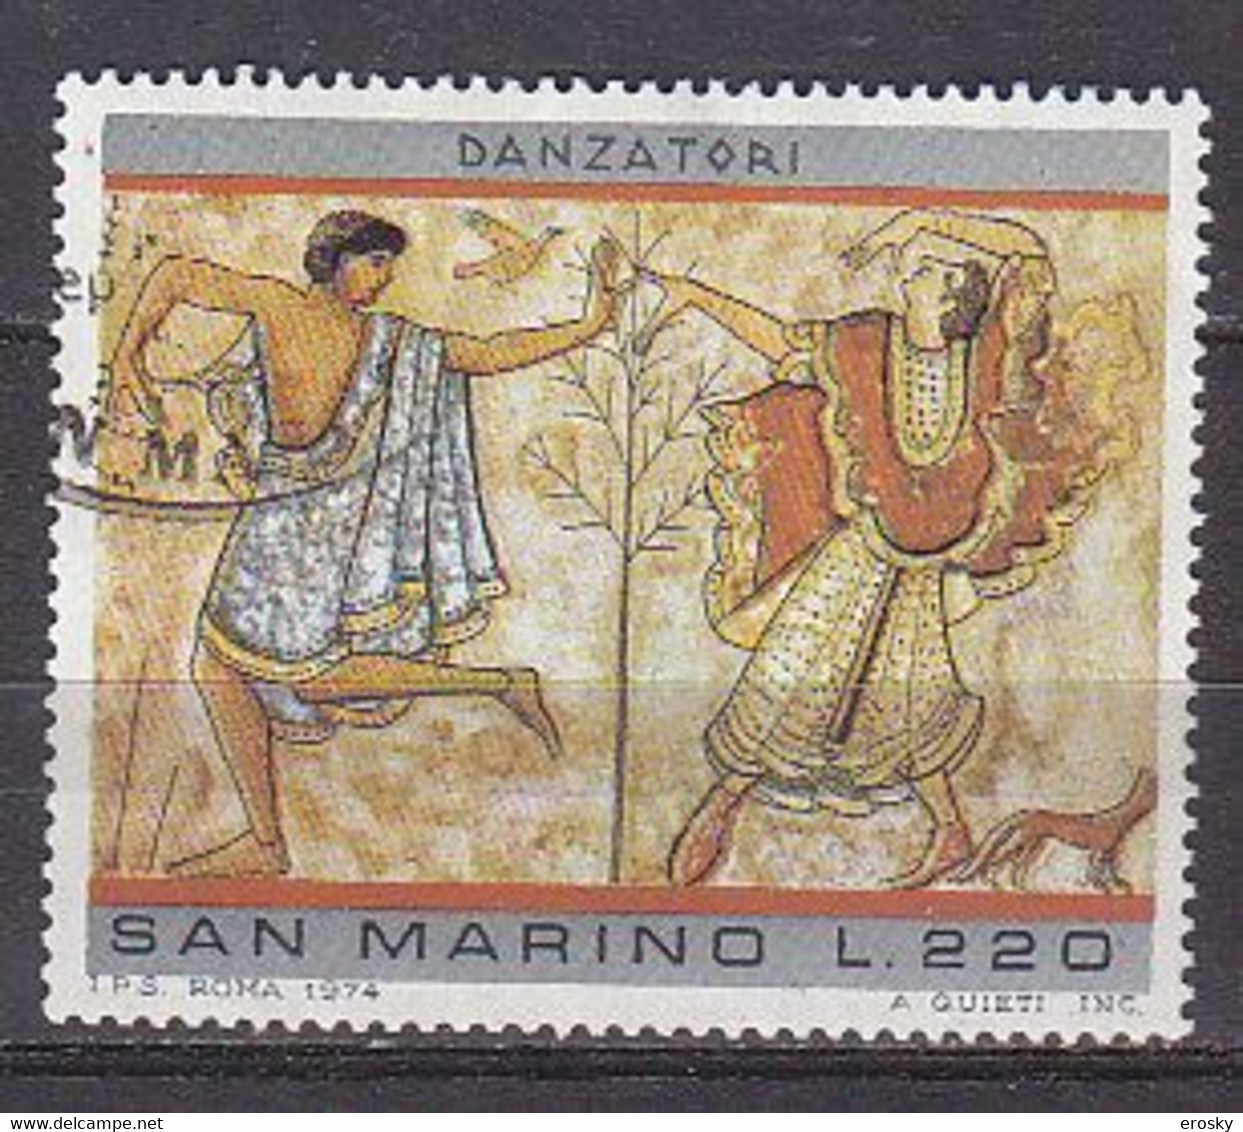 Y8804 - SAN MARINO Ss N°934 - SAINT-MARIN Yv N°890 - Used Stamps